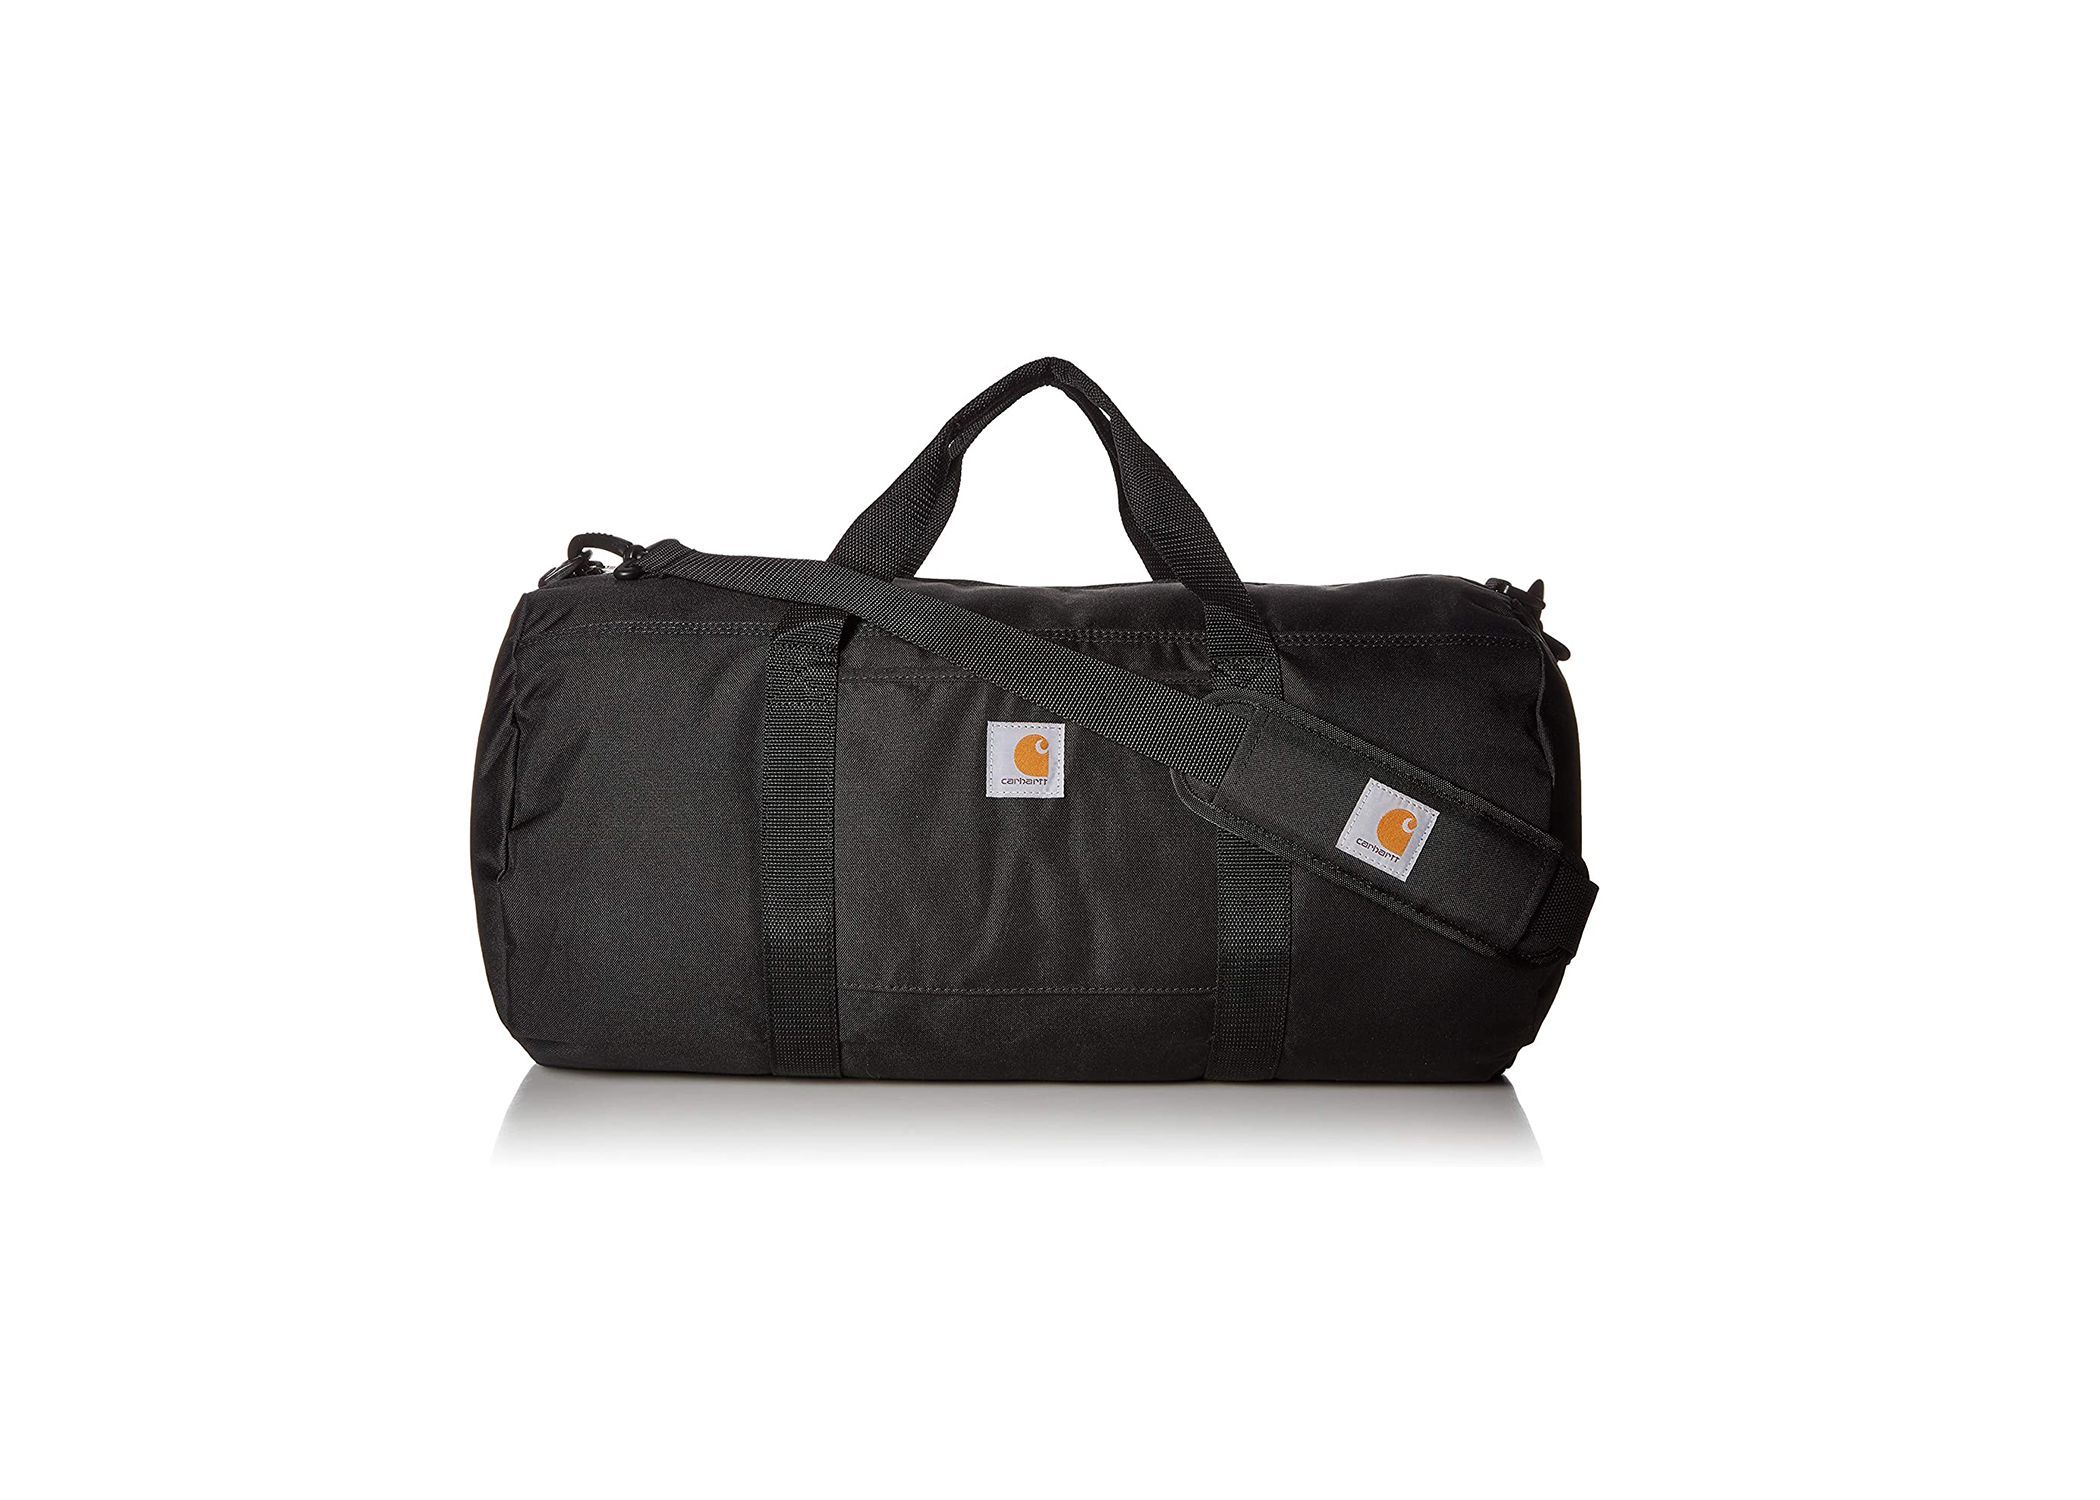 JTRVW Luggage Bags for Travel Lightweight Large Capacity Portable Duffel Bag for Men & Women Smoke Fruit Juice Travel Duffel Bag Backpack